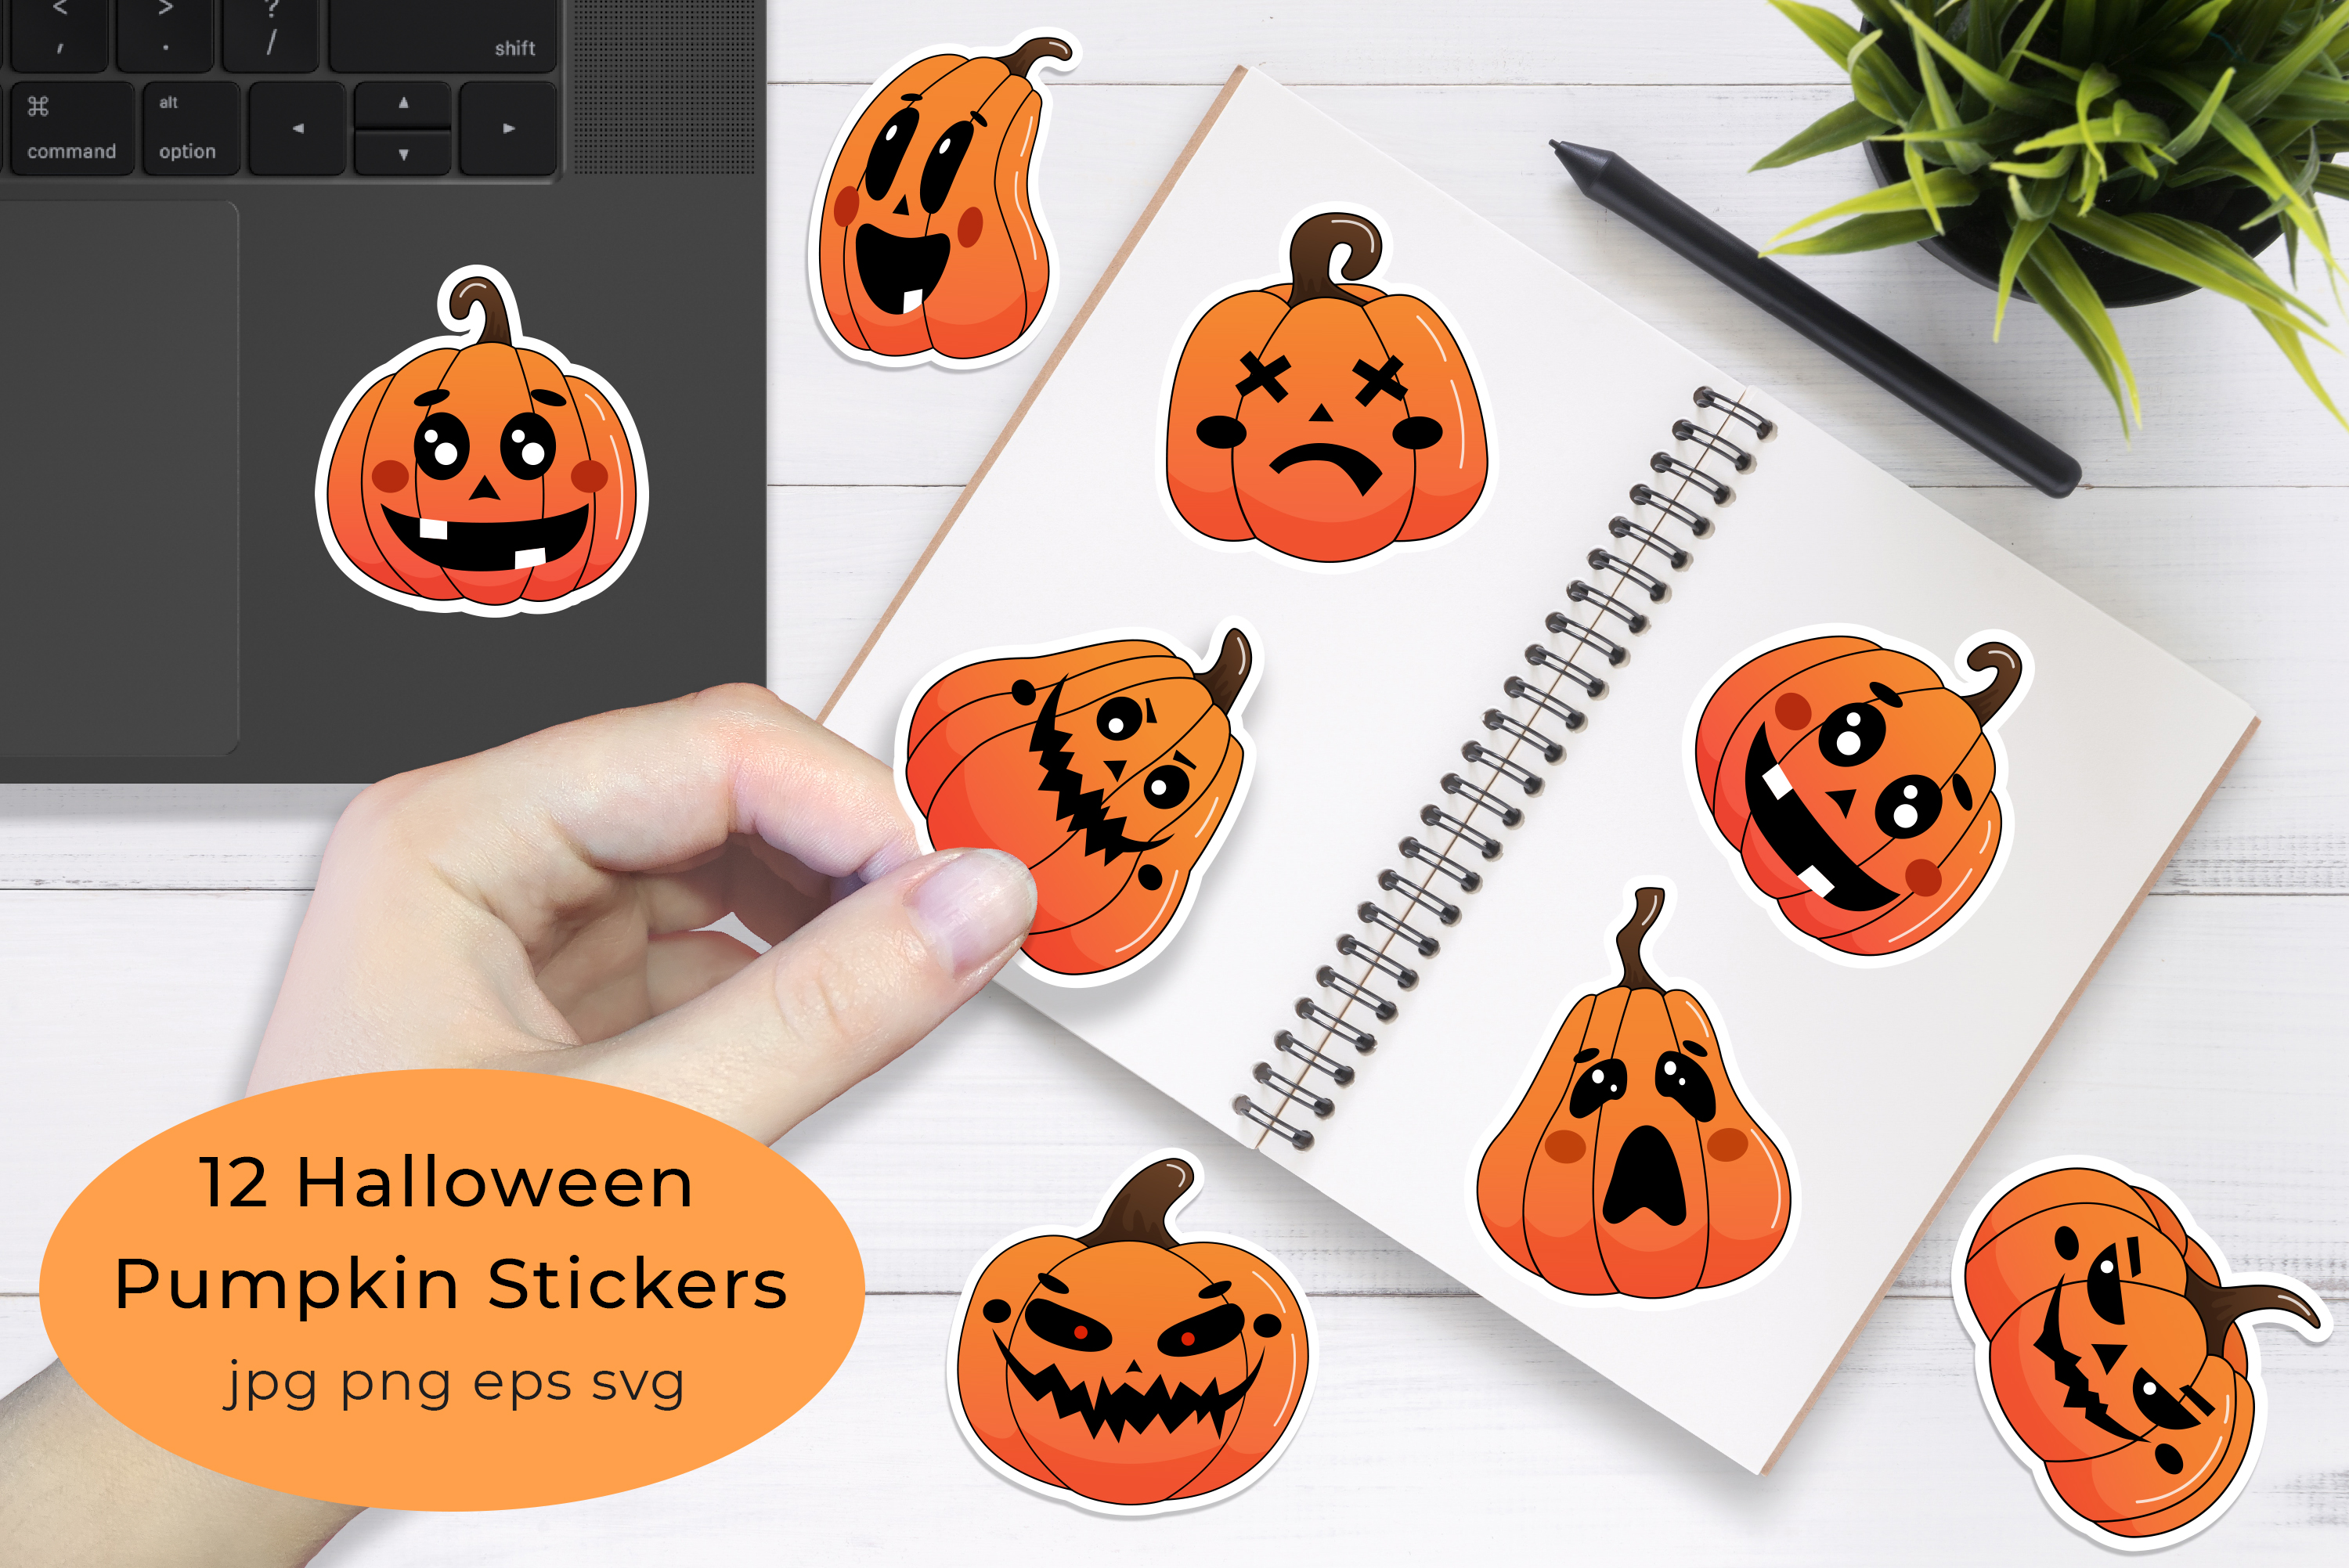 Halloween pumpkin stickers on planner.